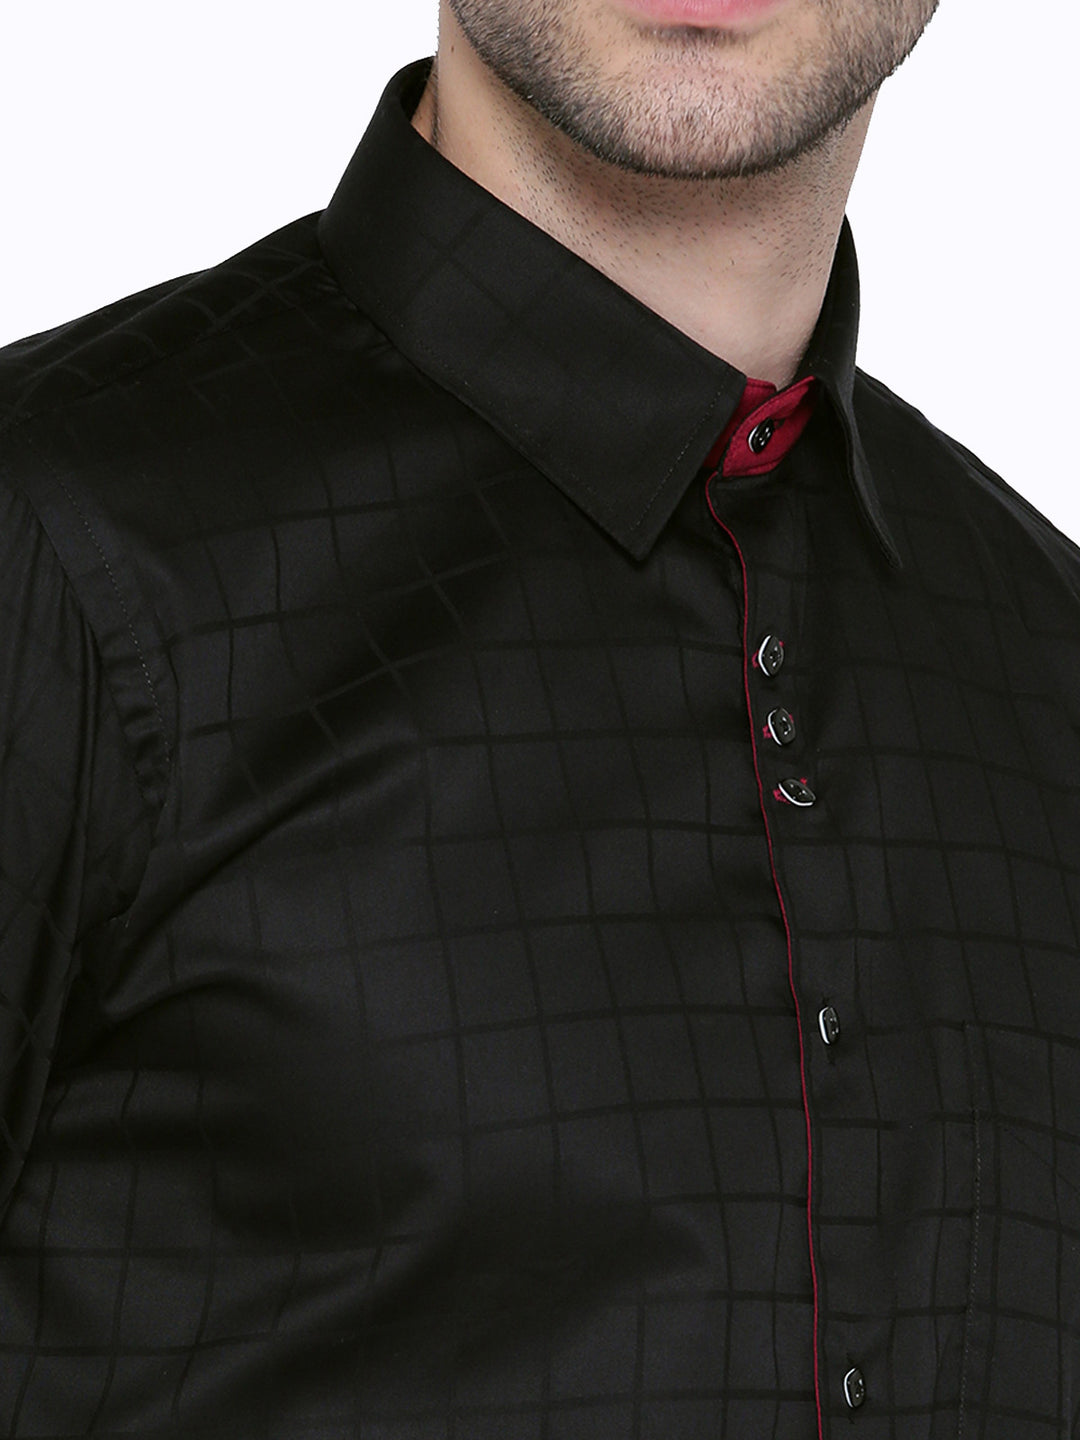 Men Black Self Designed Pure Cotton Slim Fit Casual Shirt